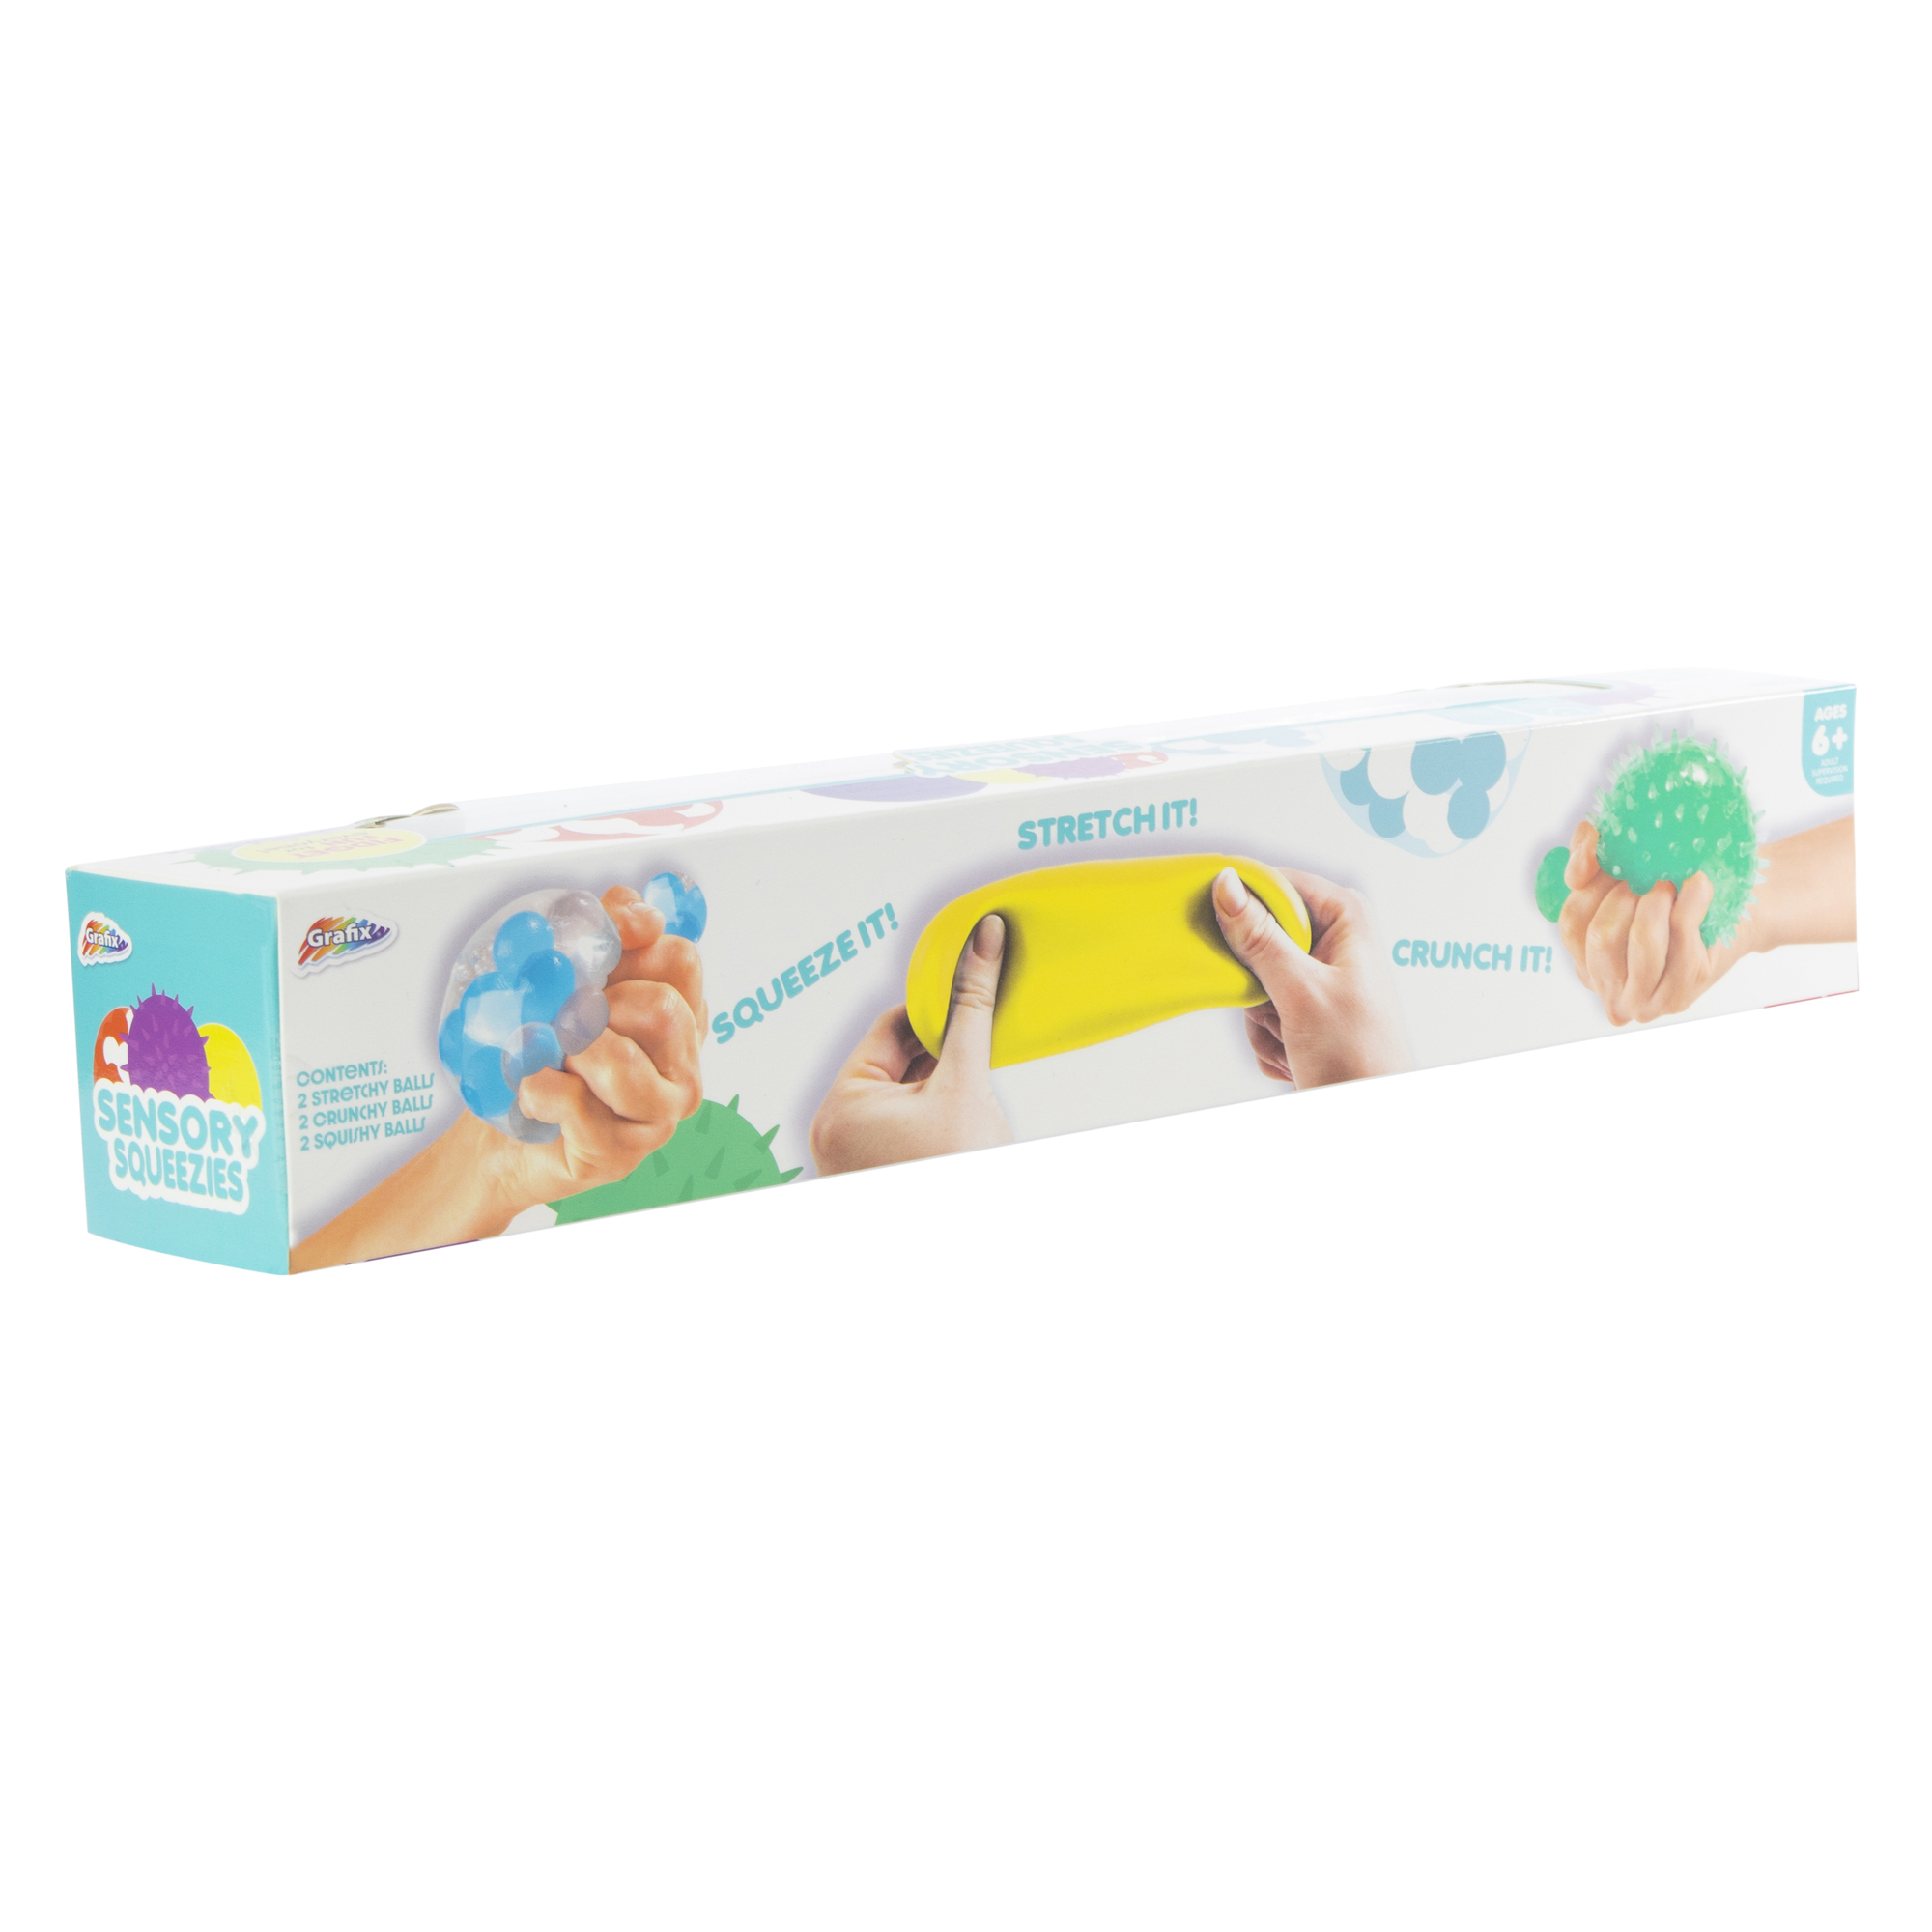 6-pack sensory squeezies fidget ball toy set